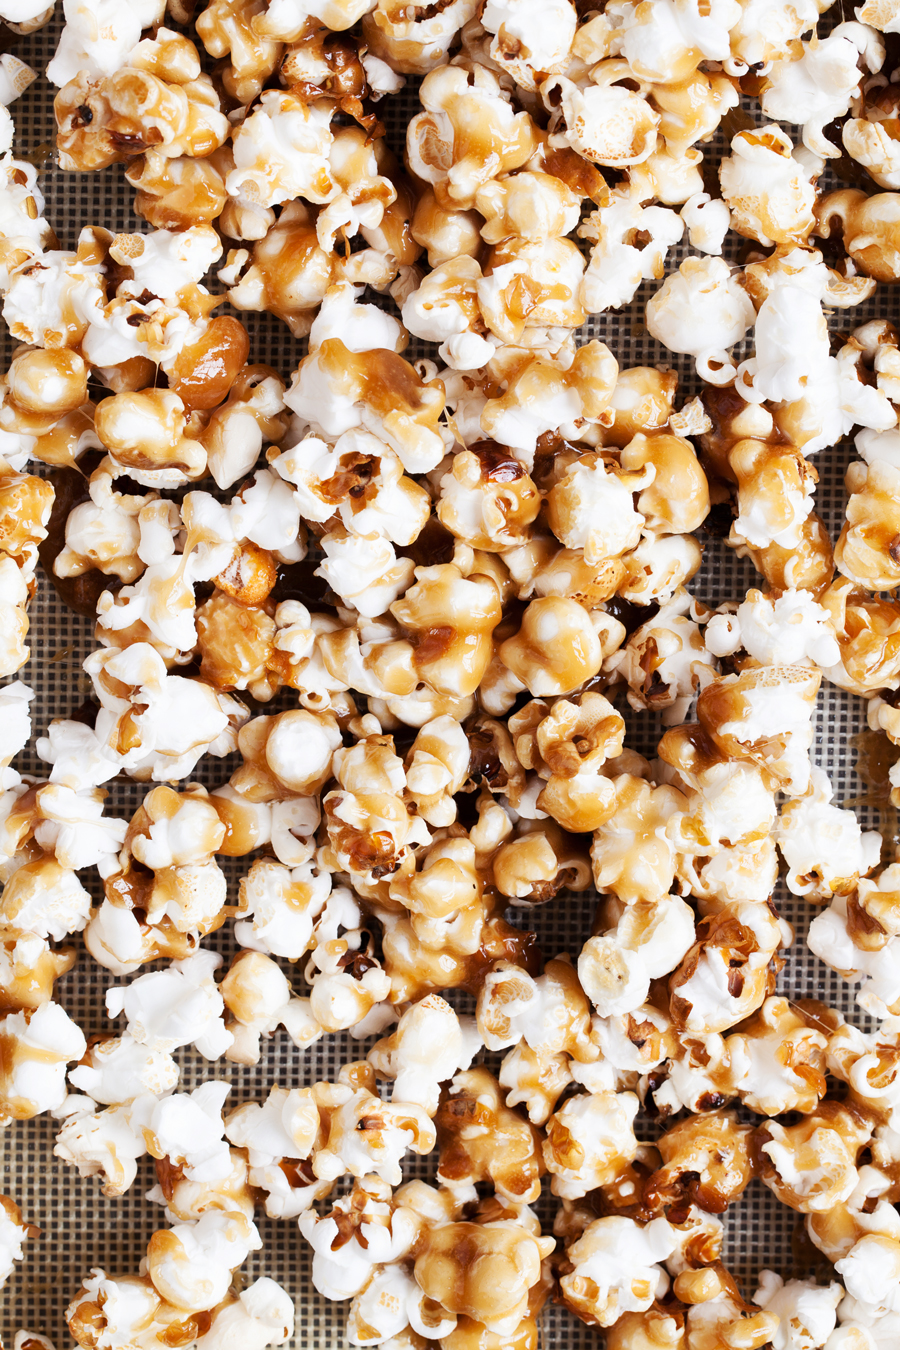 Caramel and Dark Chocolate m&m’s Popcorn - The perfect Valentine's Day movie snack!